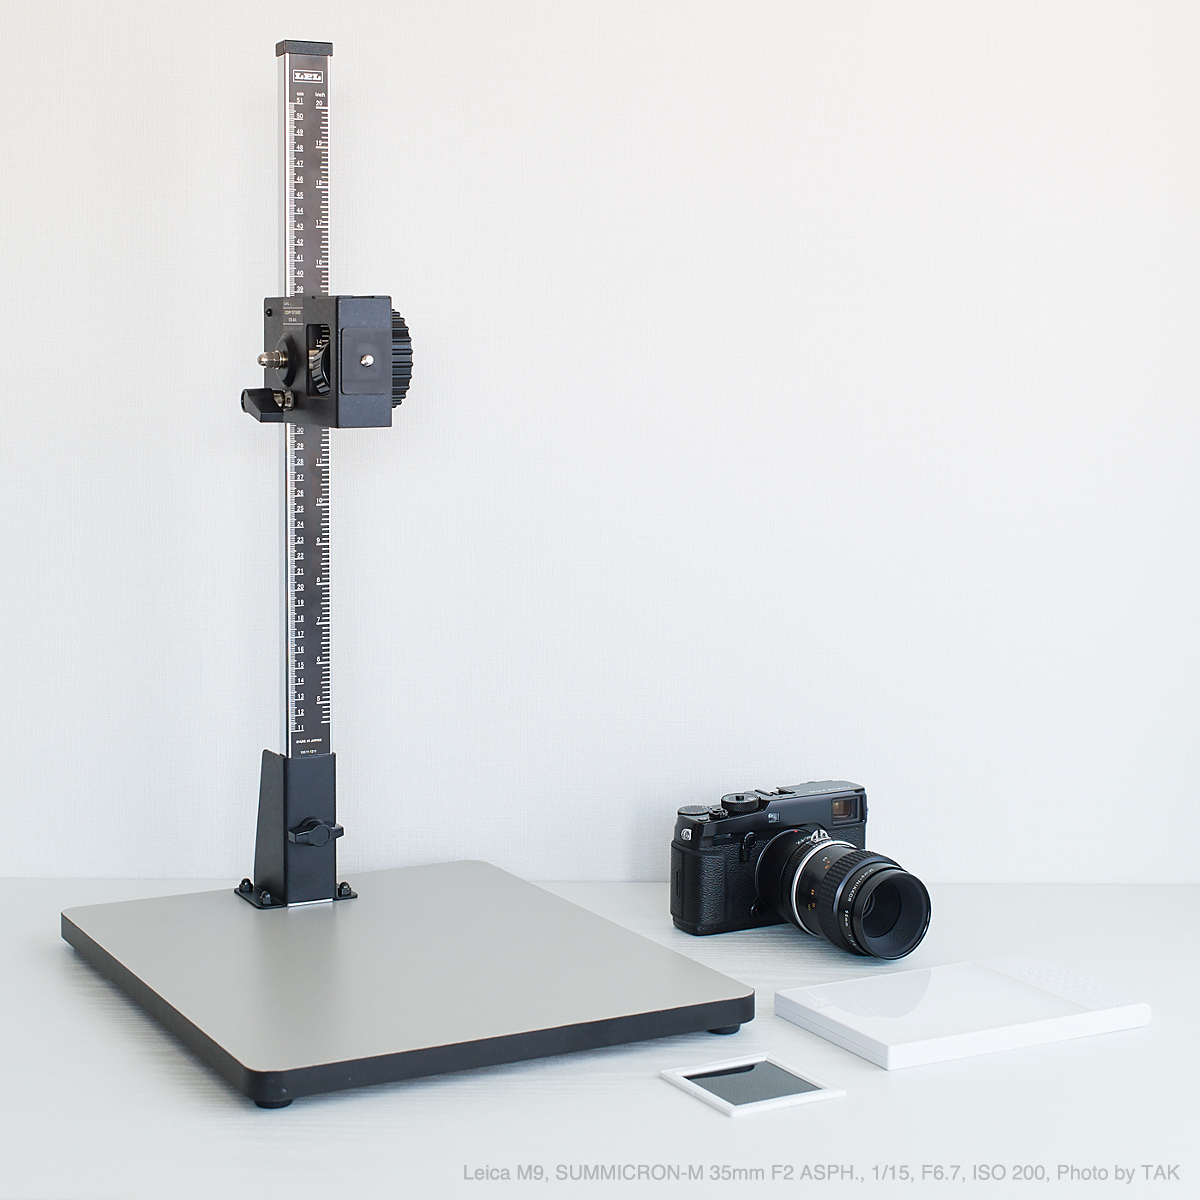 Leica M9, SUMMICRON-M 35mm F2 ASPH., 1/15, F6.7, ISO 200, Photo by TAK